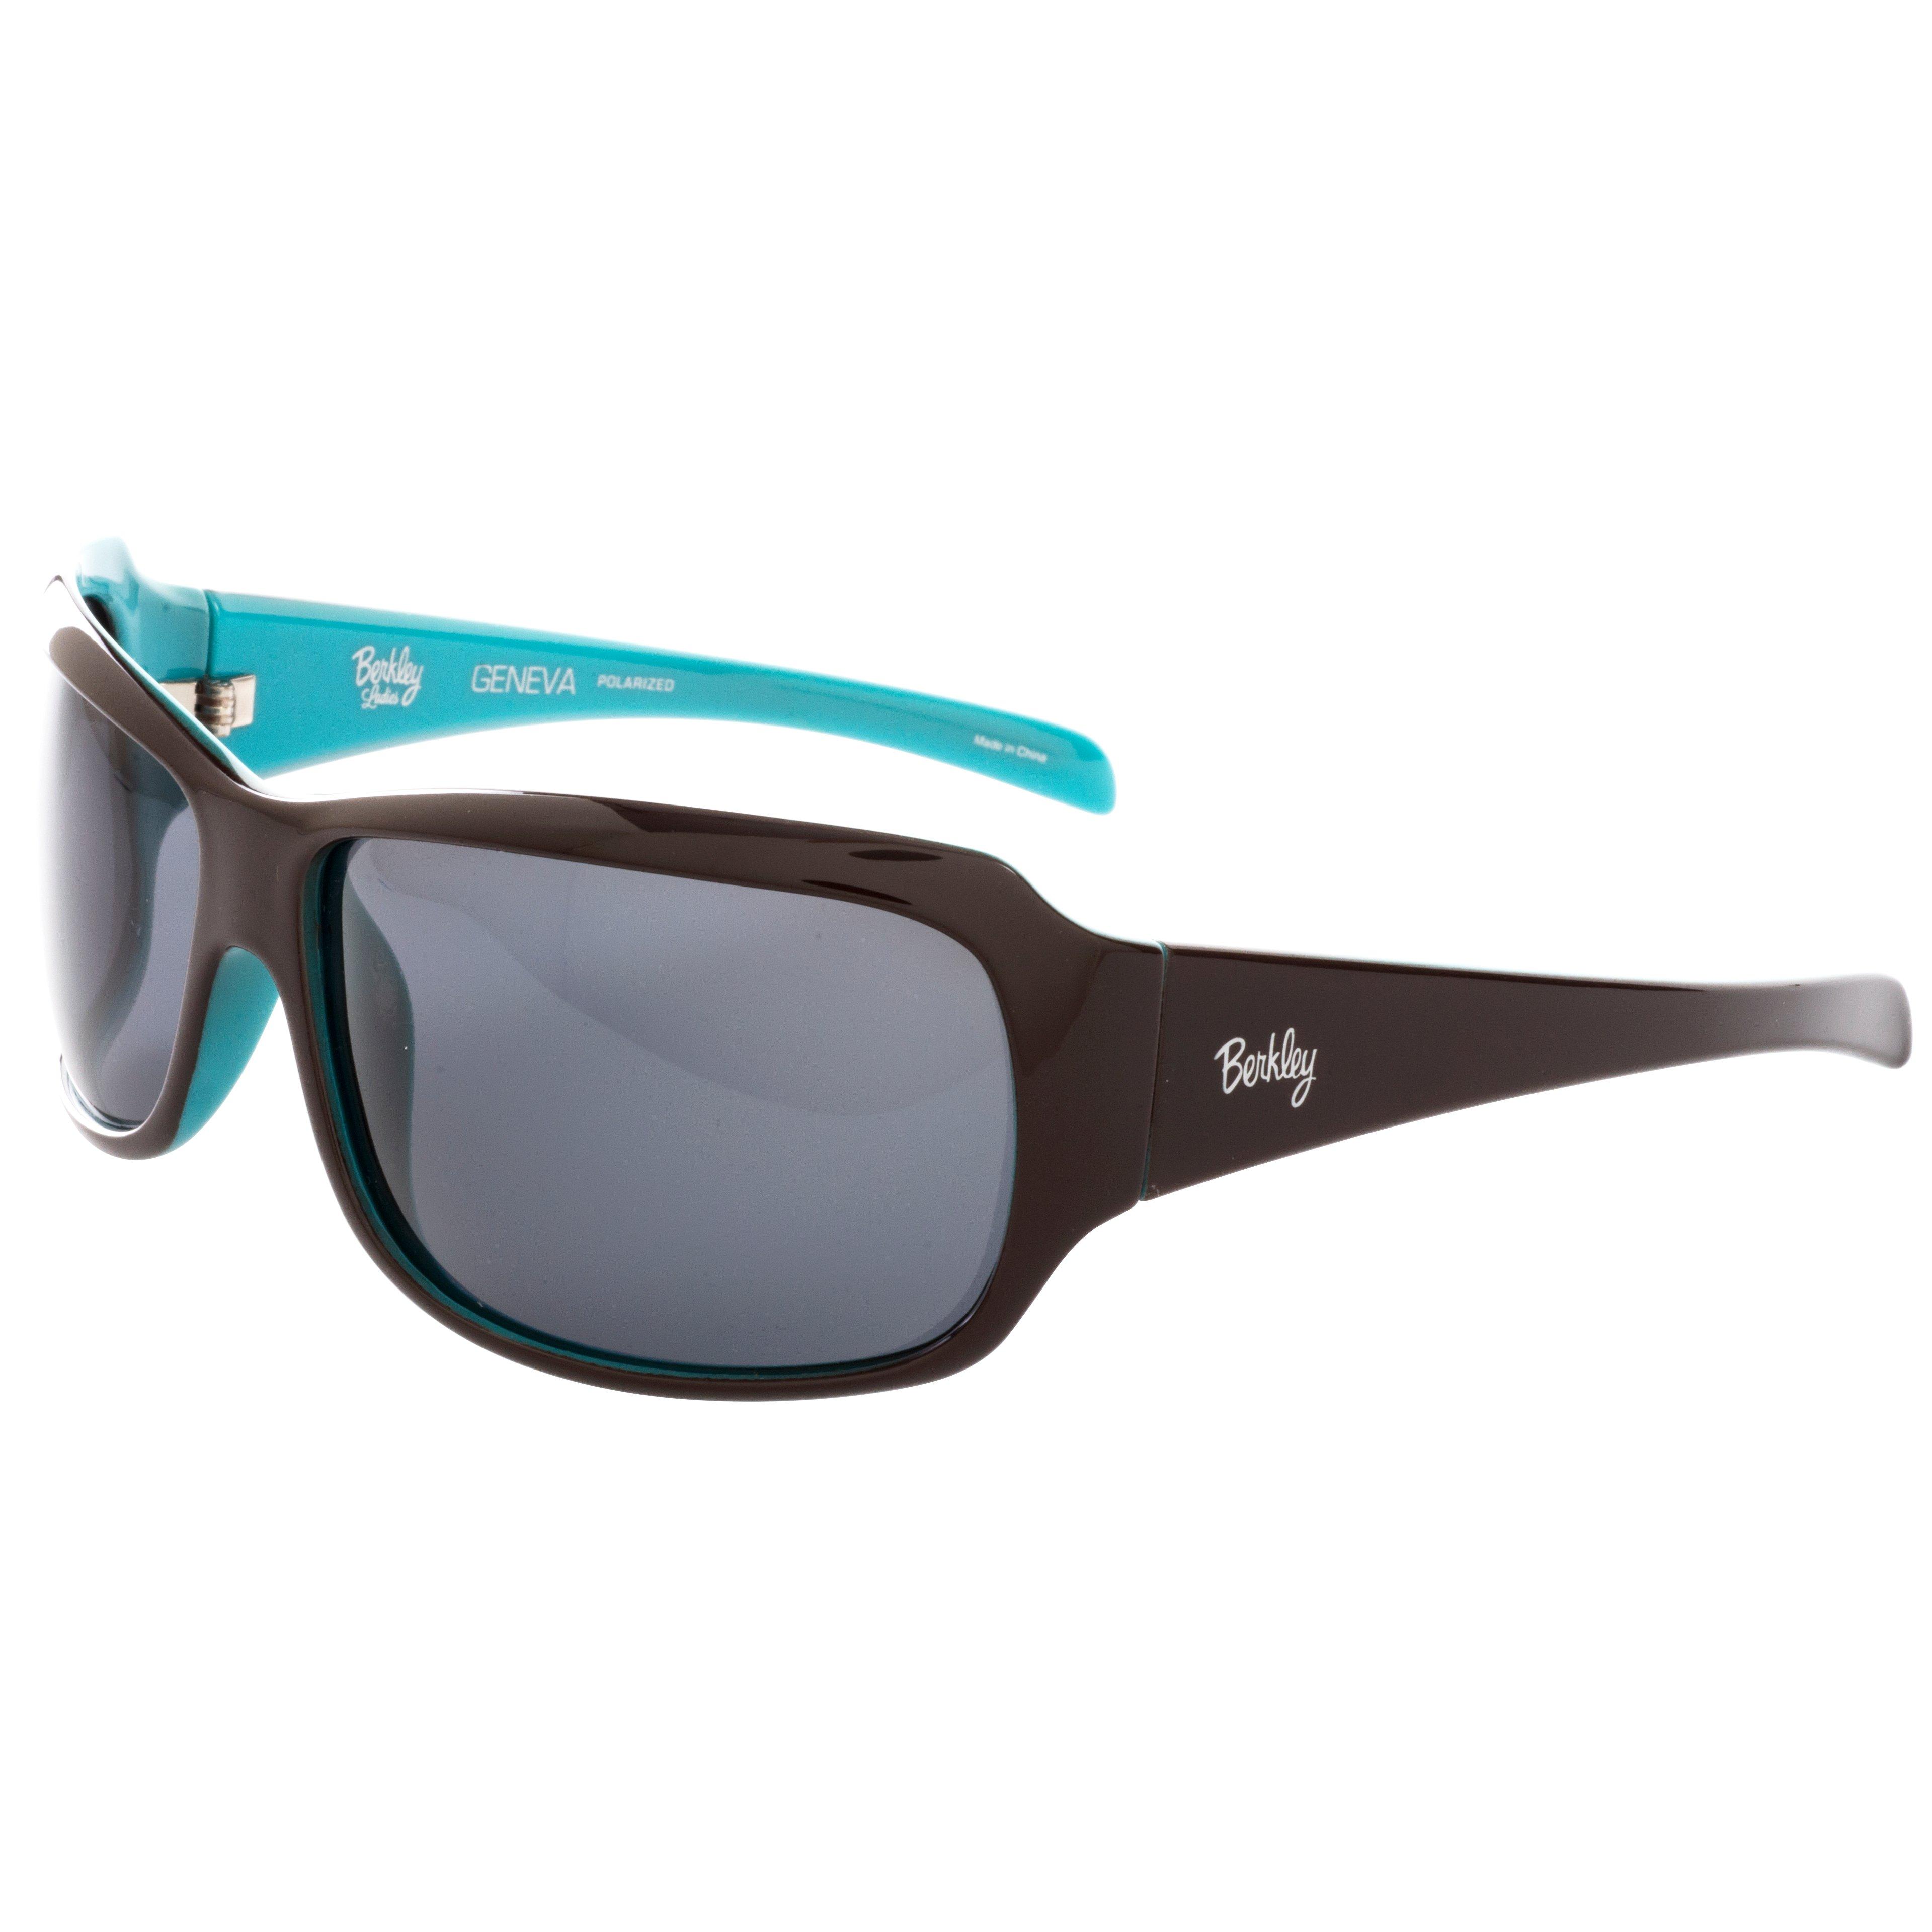 Berkley Ladies Polarized White Sunglasses 100% UVA and UVB Protection Fishing 